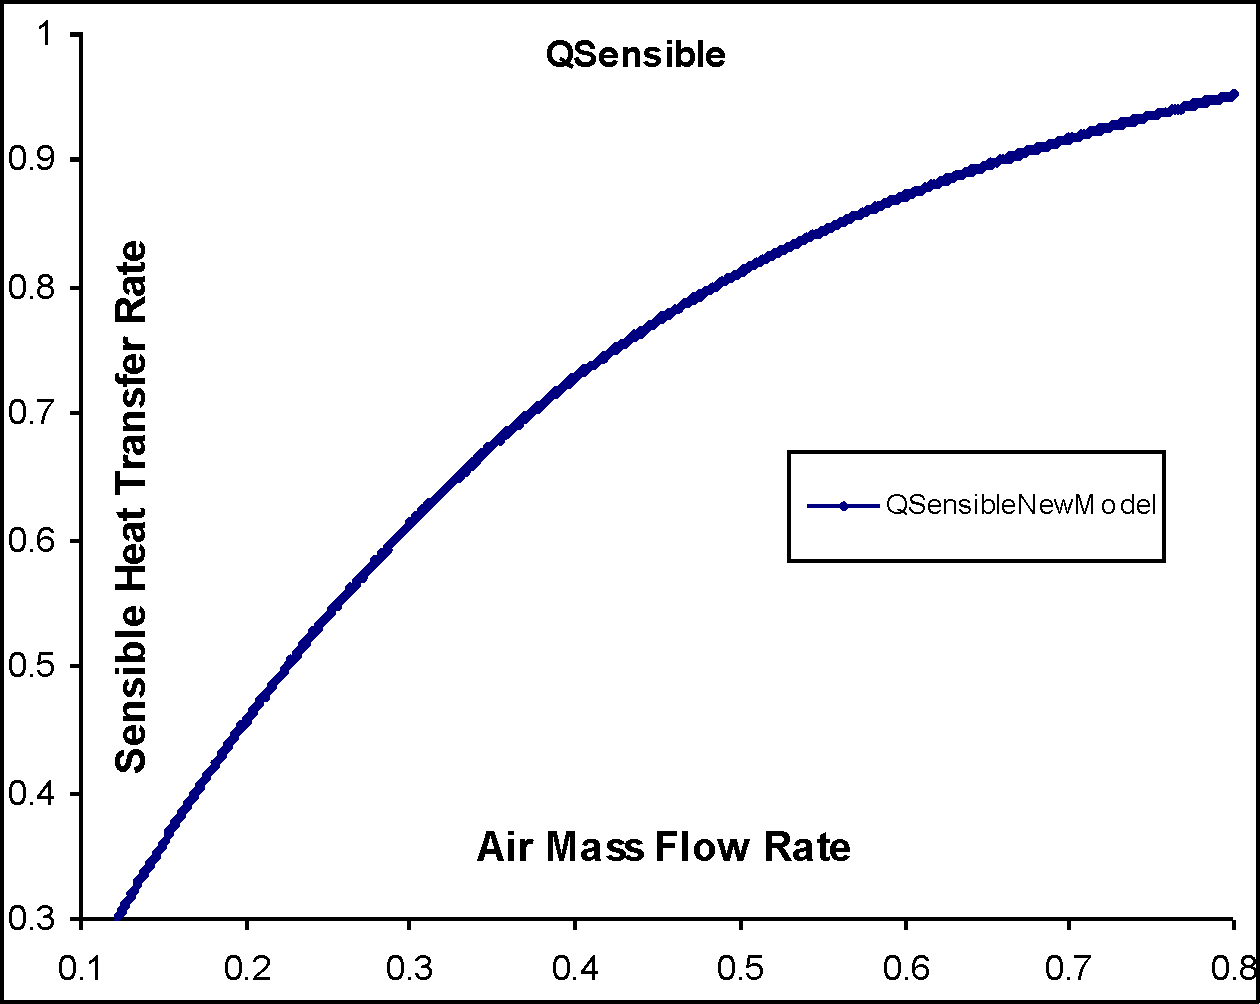 Sensible Load Variations Vs. Air mass Flow Rate [fig:sensible-load-variations-vs-air-mass-flow]